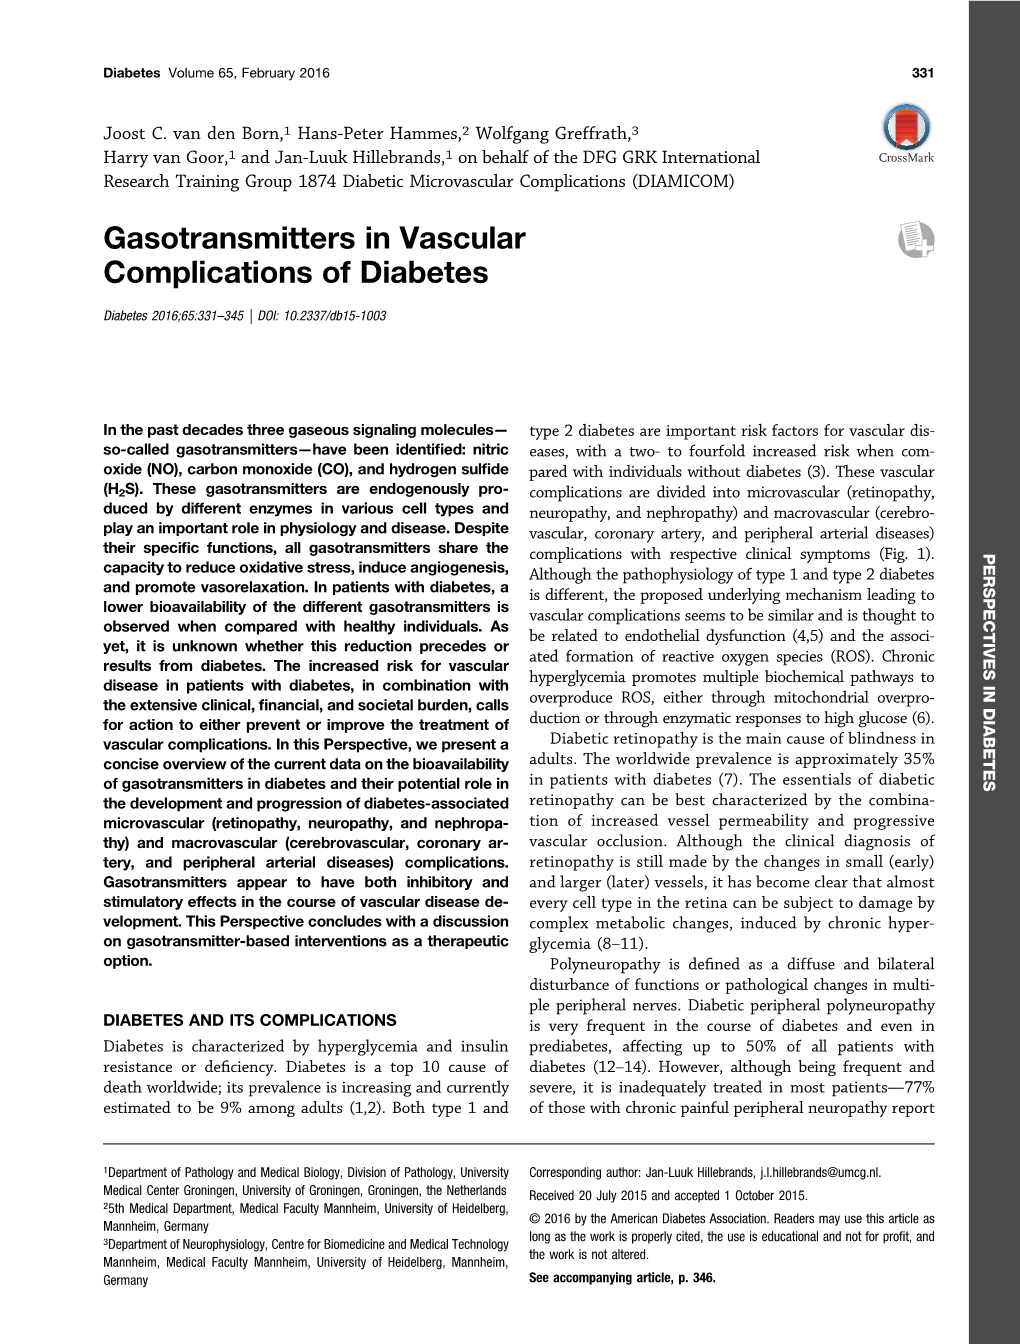 Gasotransmitters in Vascular Complications of Diabetes